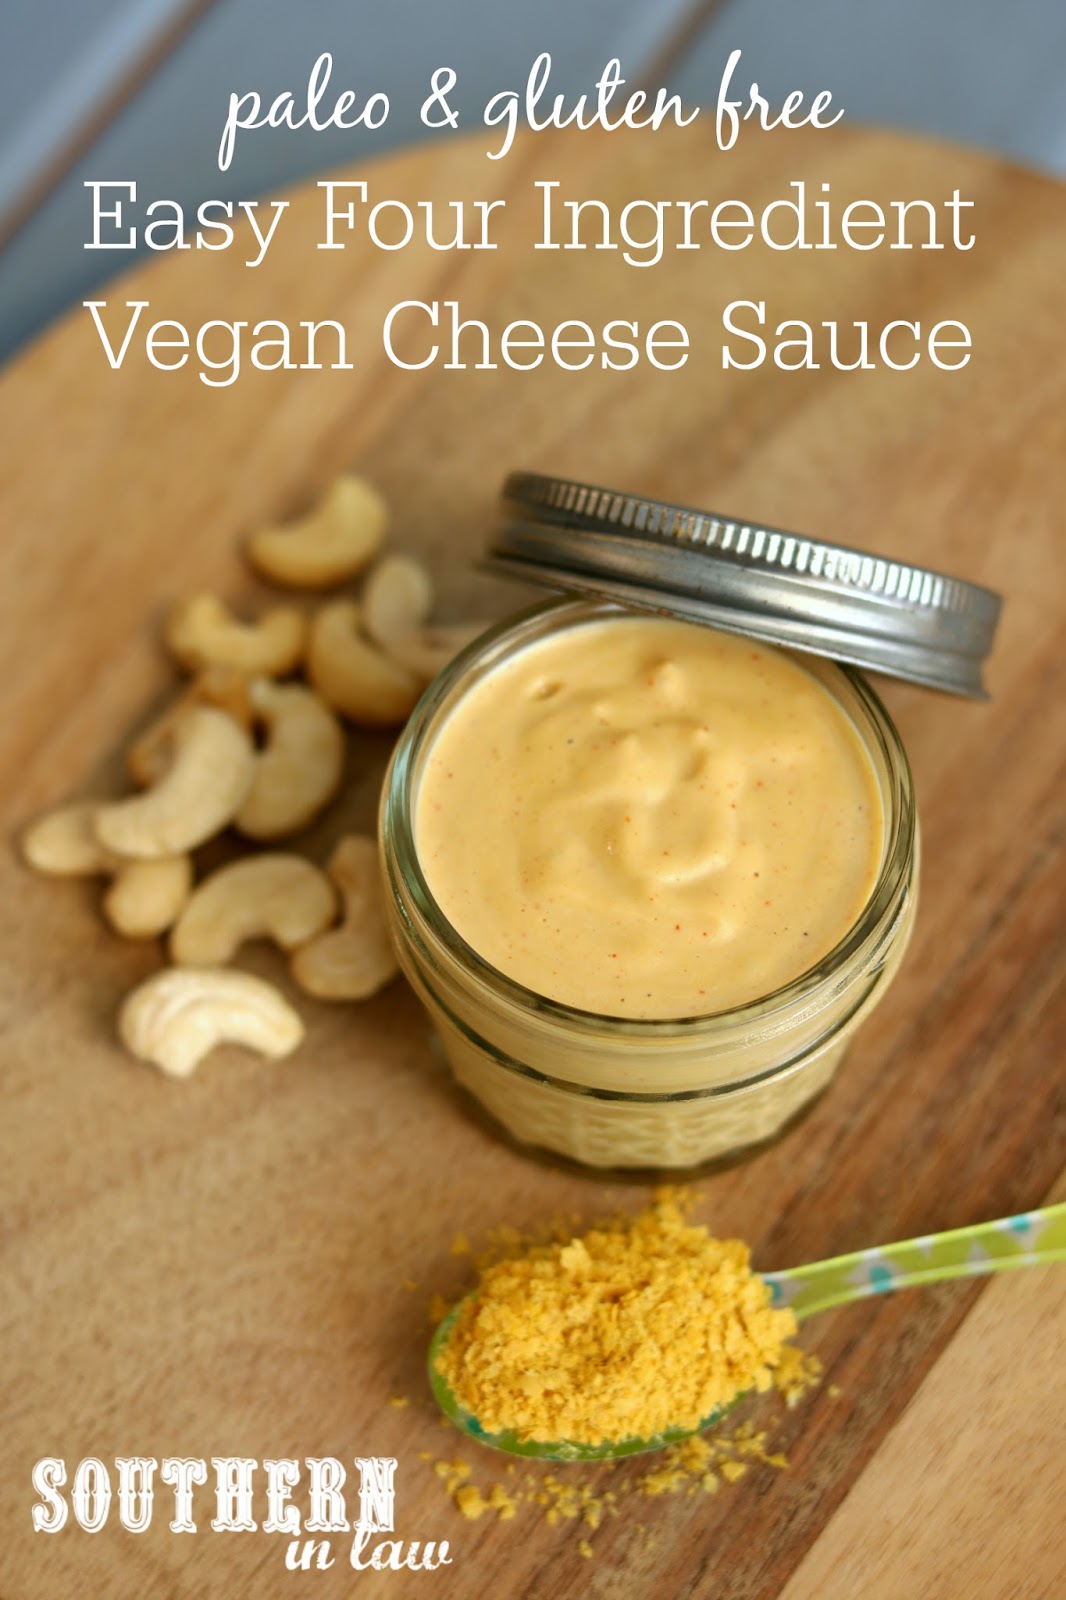 Easy Four Ingredient Vegan Cheese Sauce Recipe